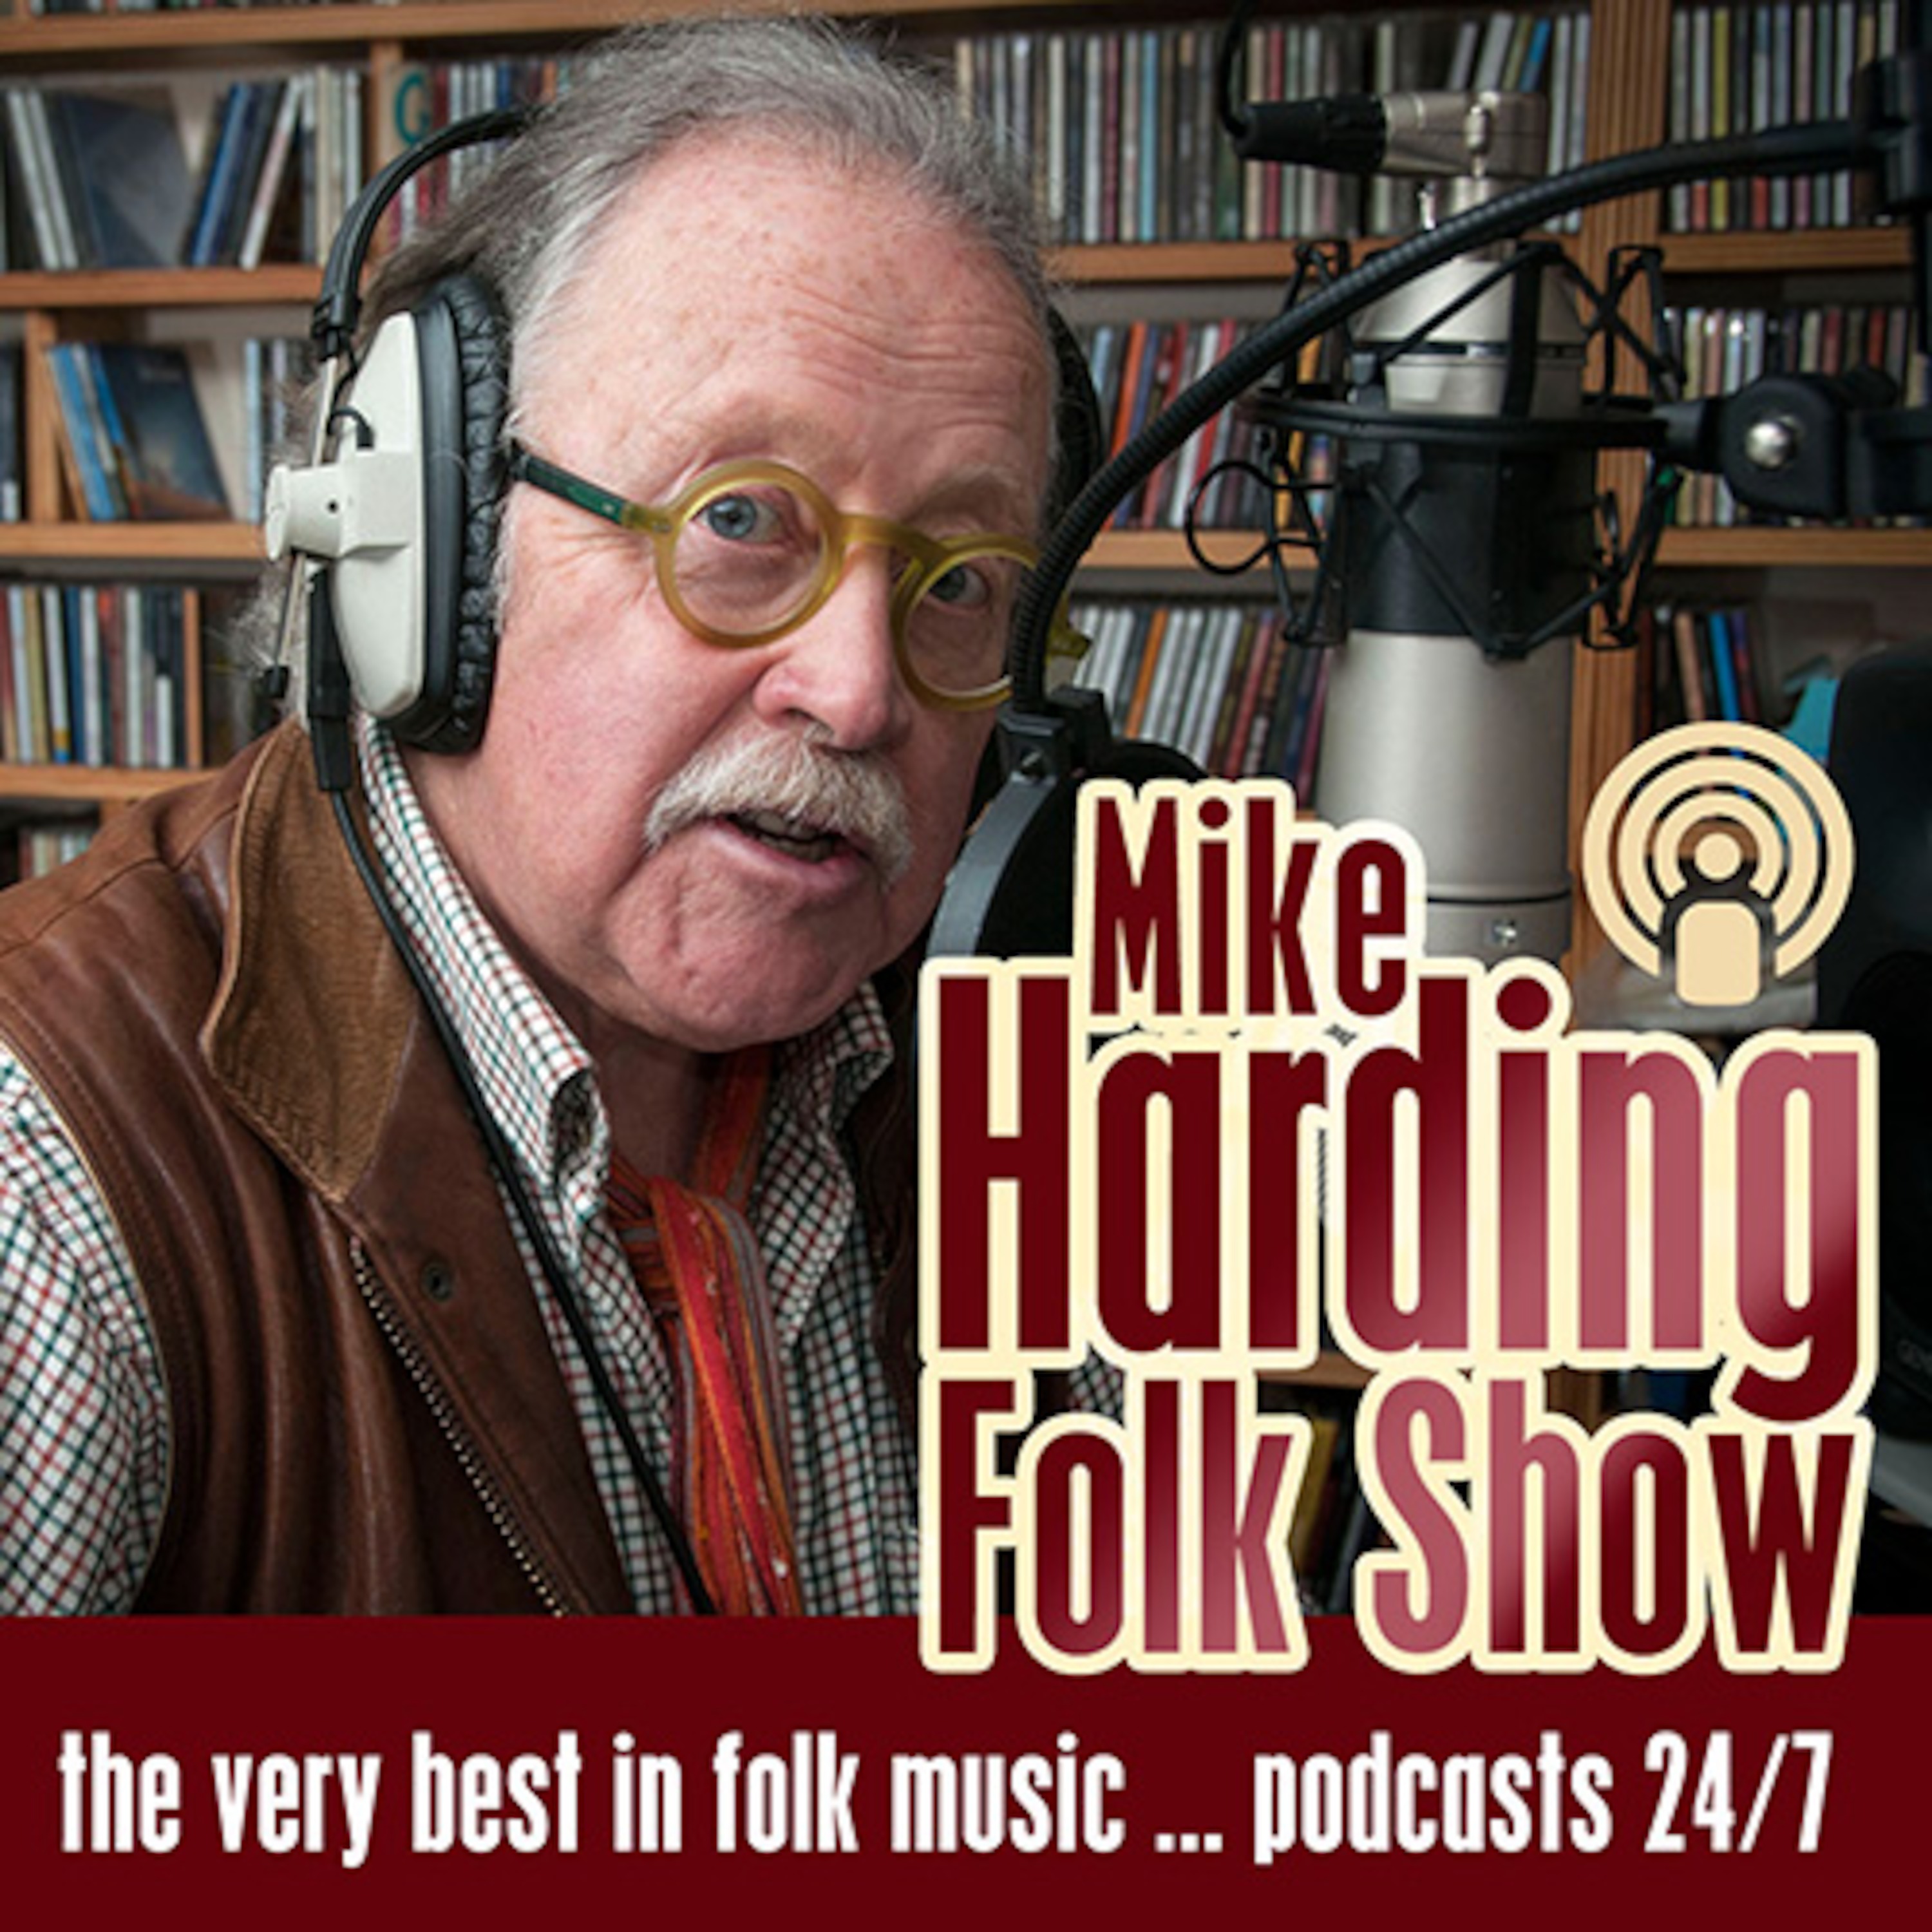 Mike Harding Folk Show 98